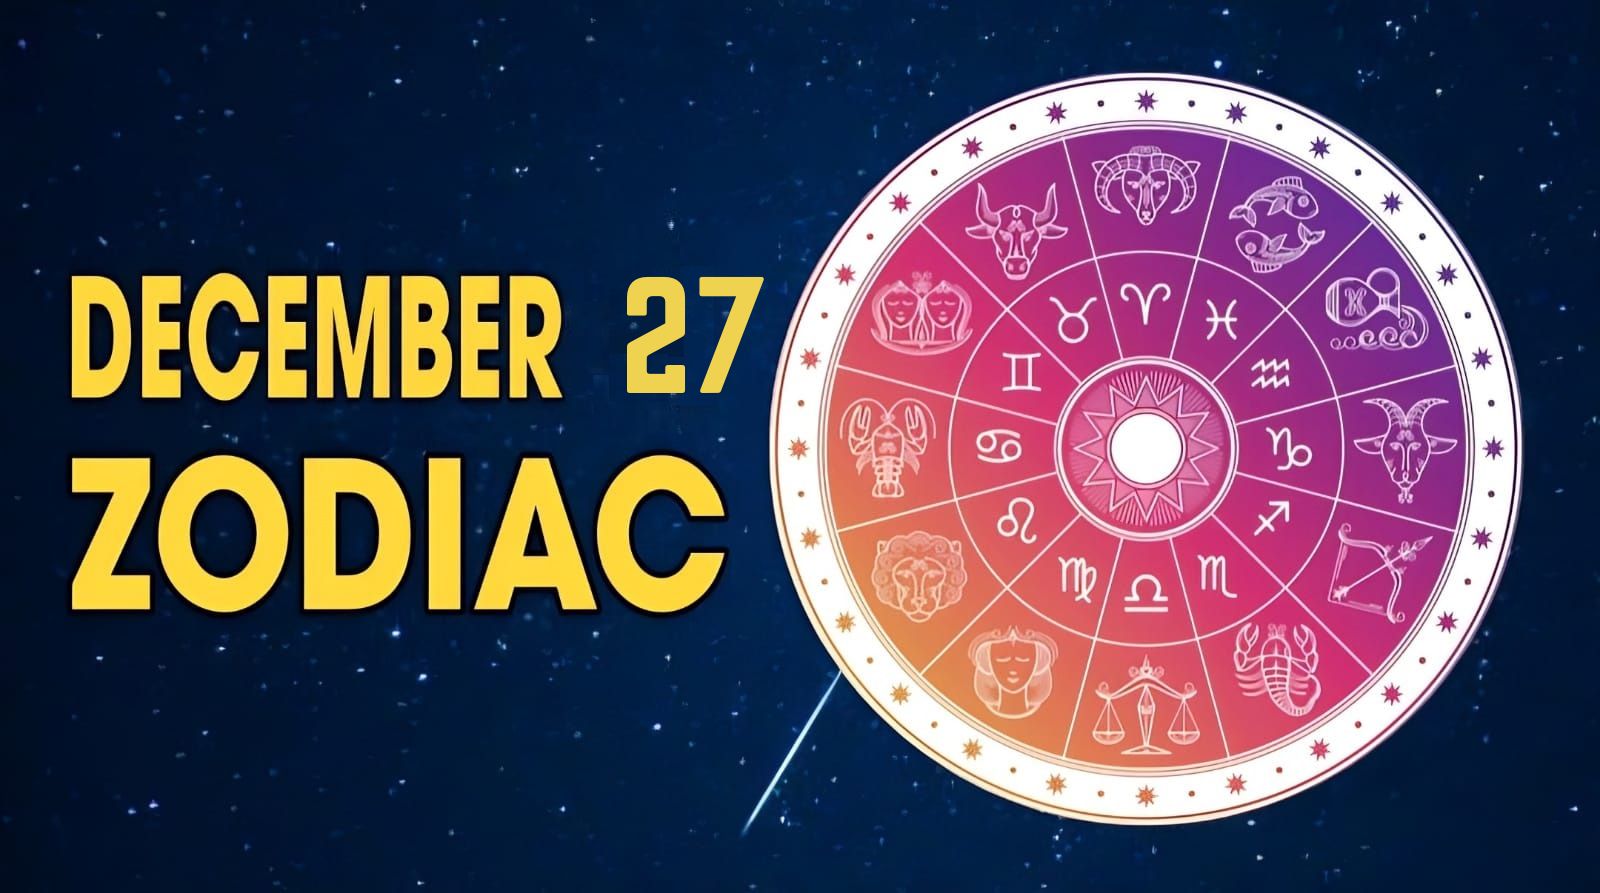 December 27 Zodiac